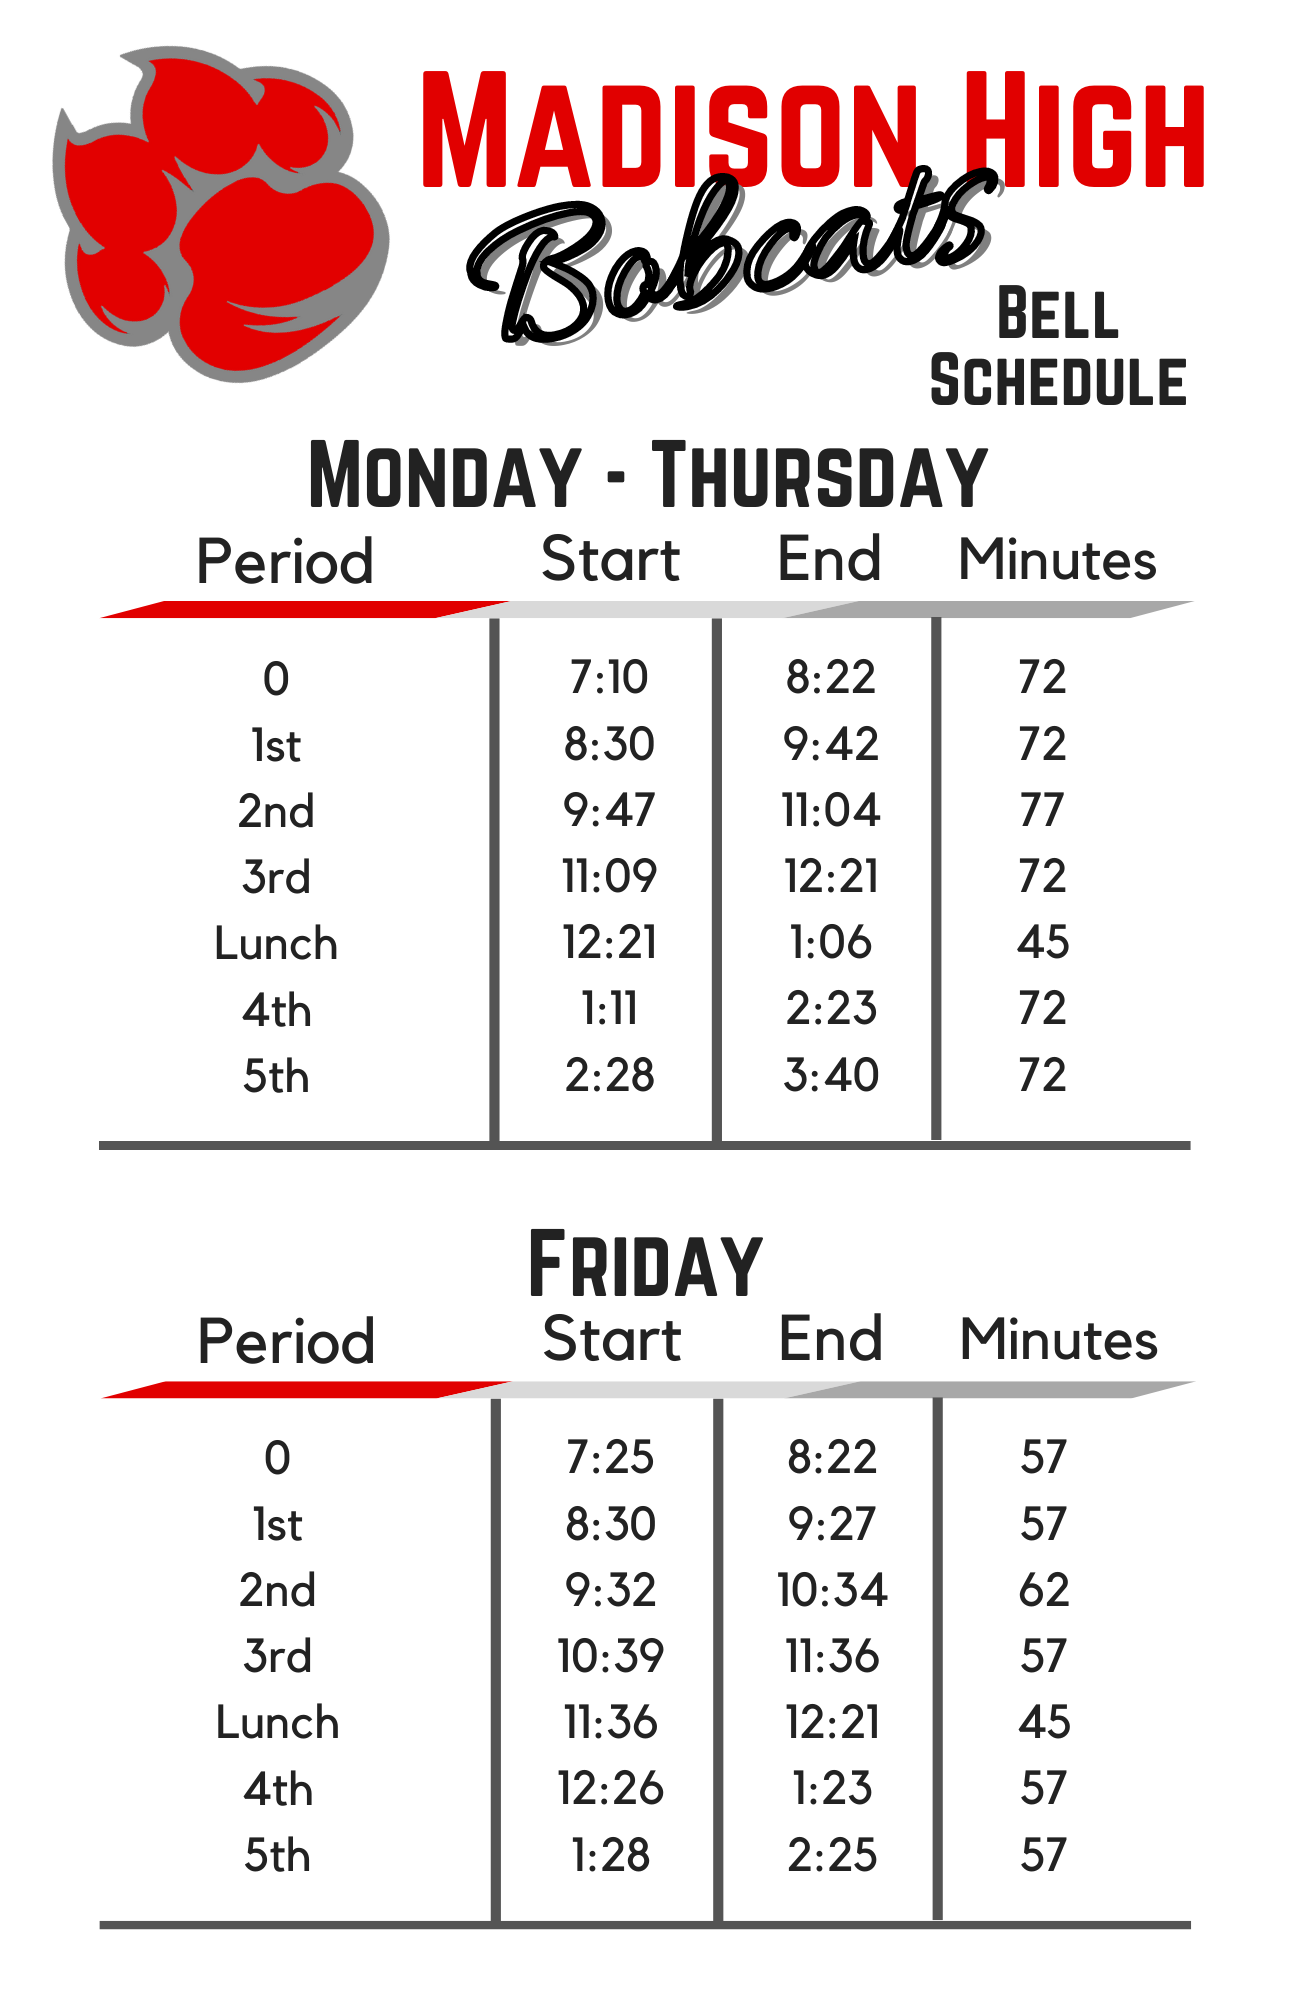 MHS Bell Schedule